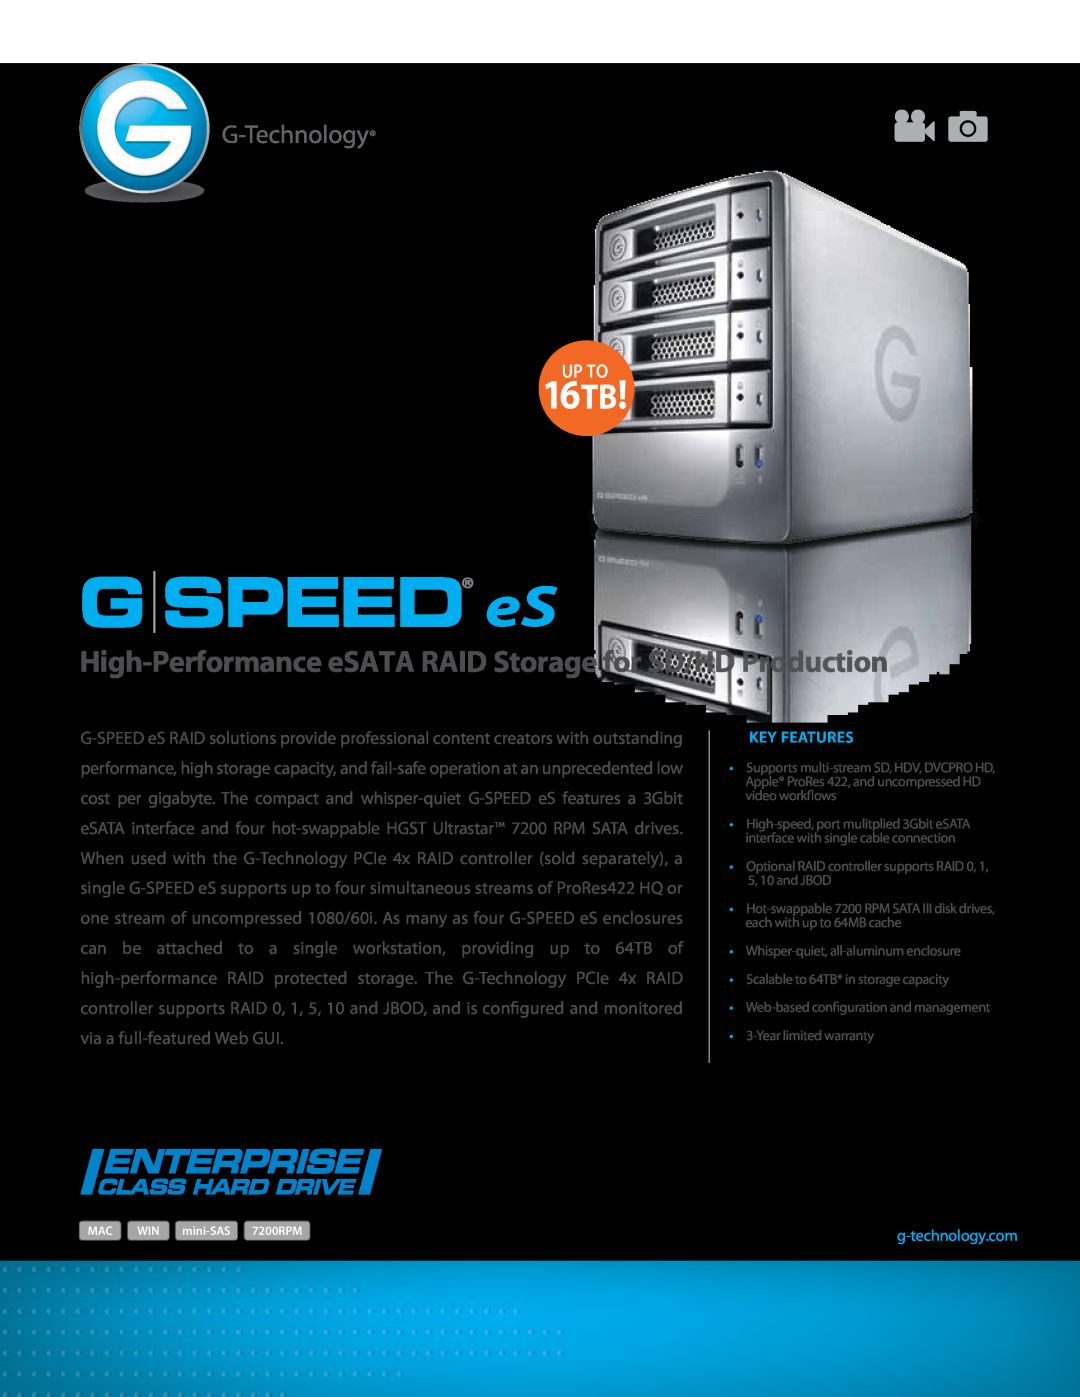 G-Technology 0G1871 warranty G SPEED eS, 16TB, High-Performance eSATA RAID Storage for SD/HD Production, Up To 